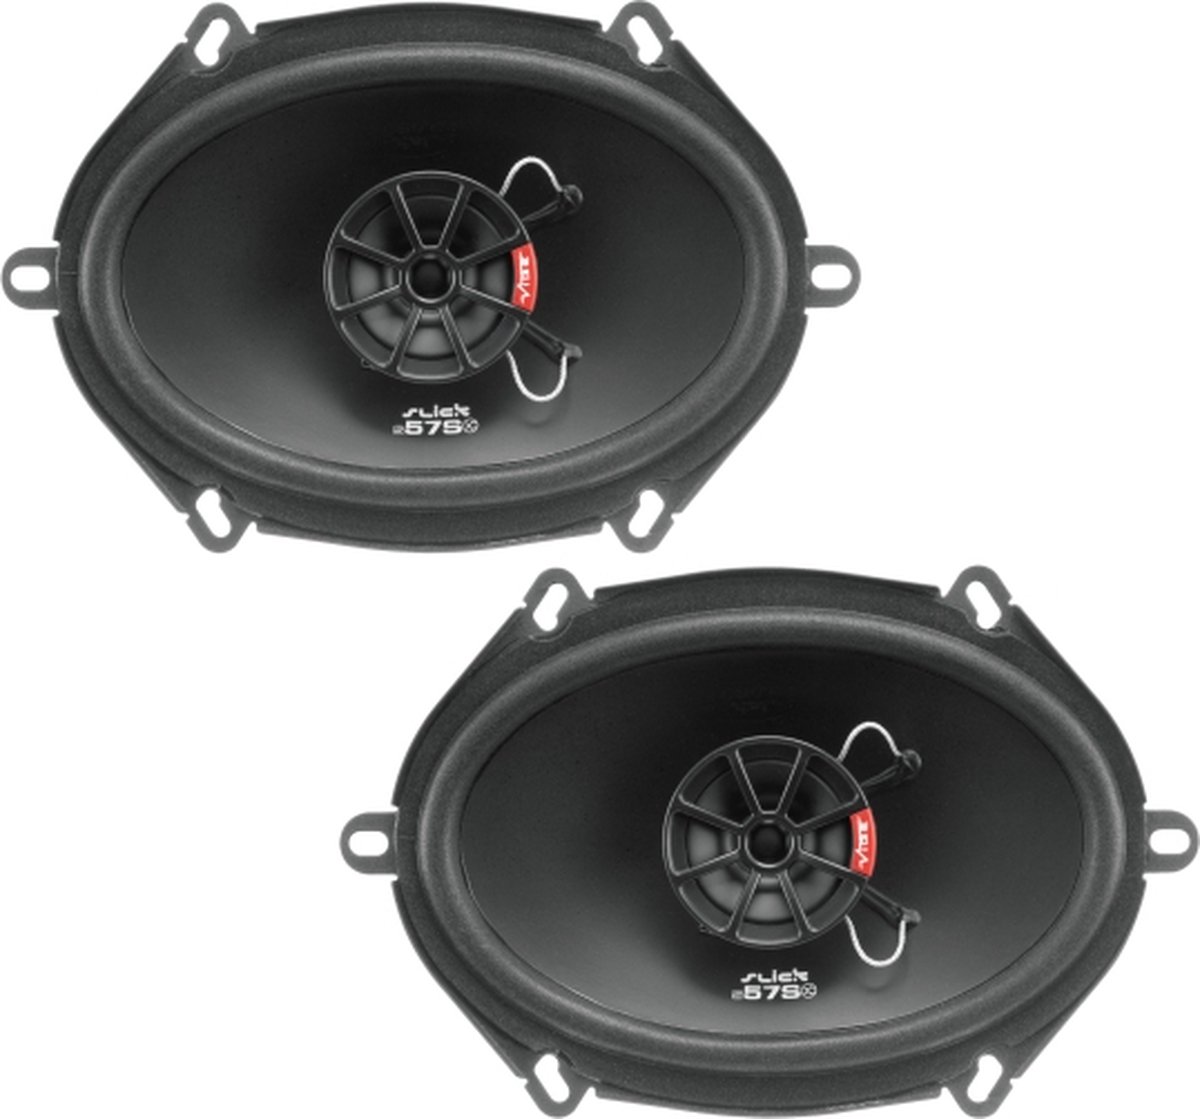 Vibe - Slick 57 - 5x7'' Inch - Auto speakers Composet - 240Watt